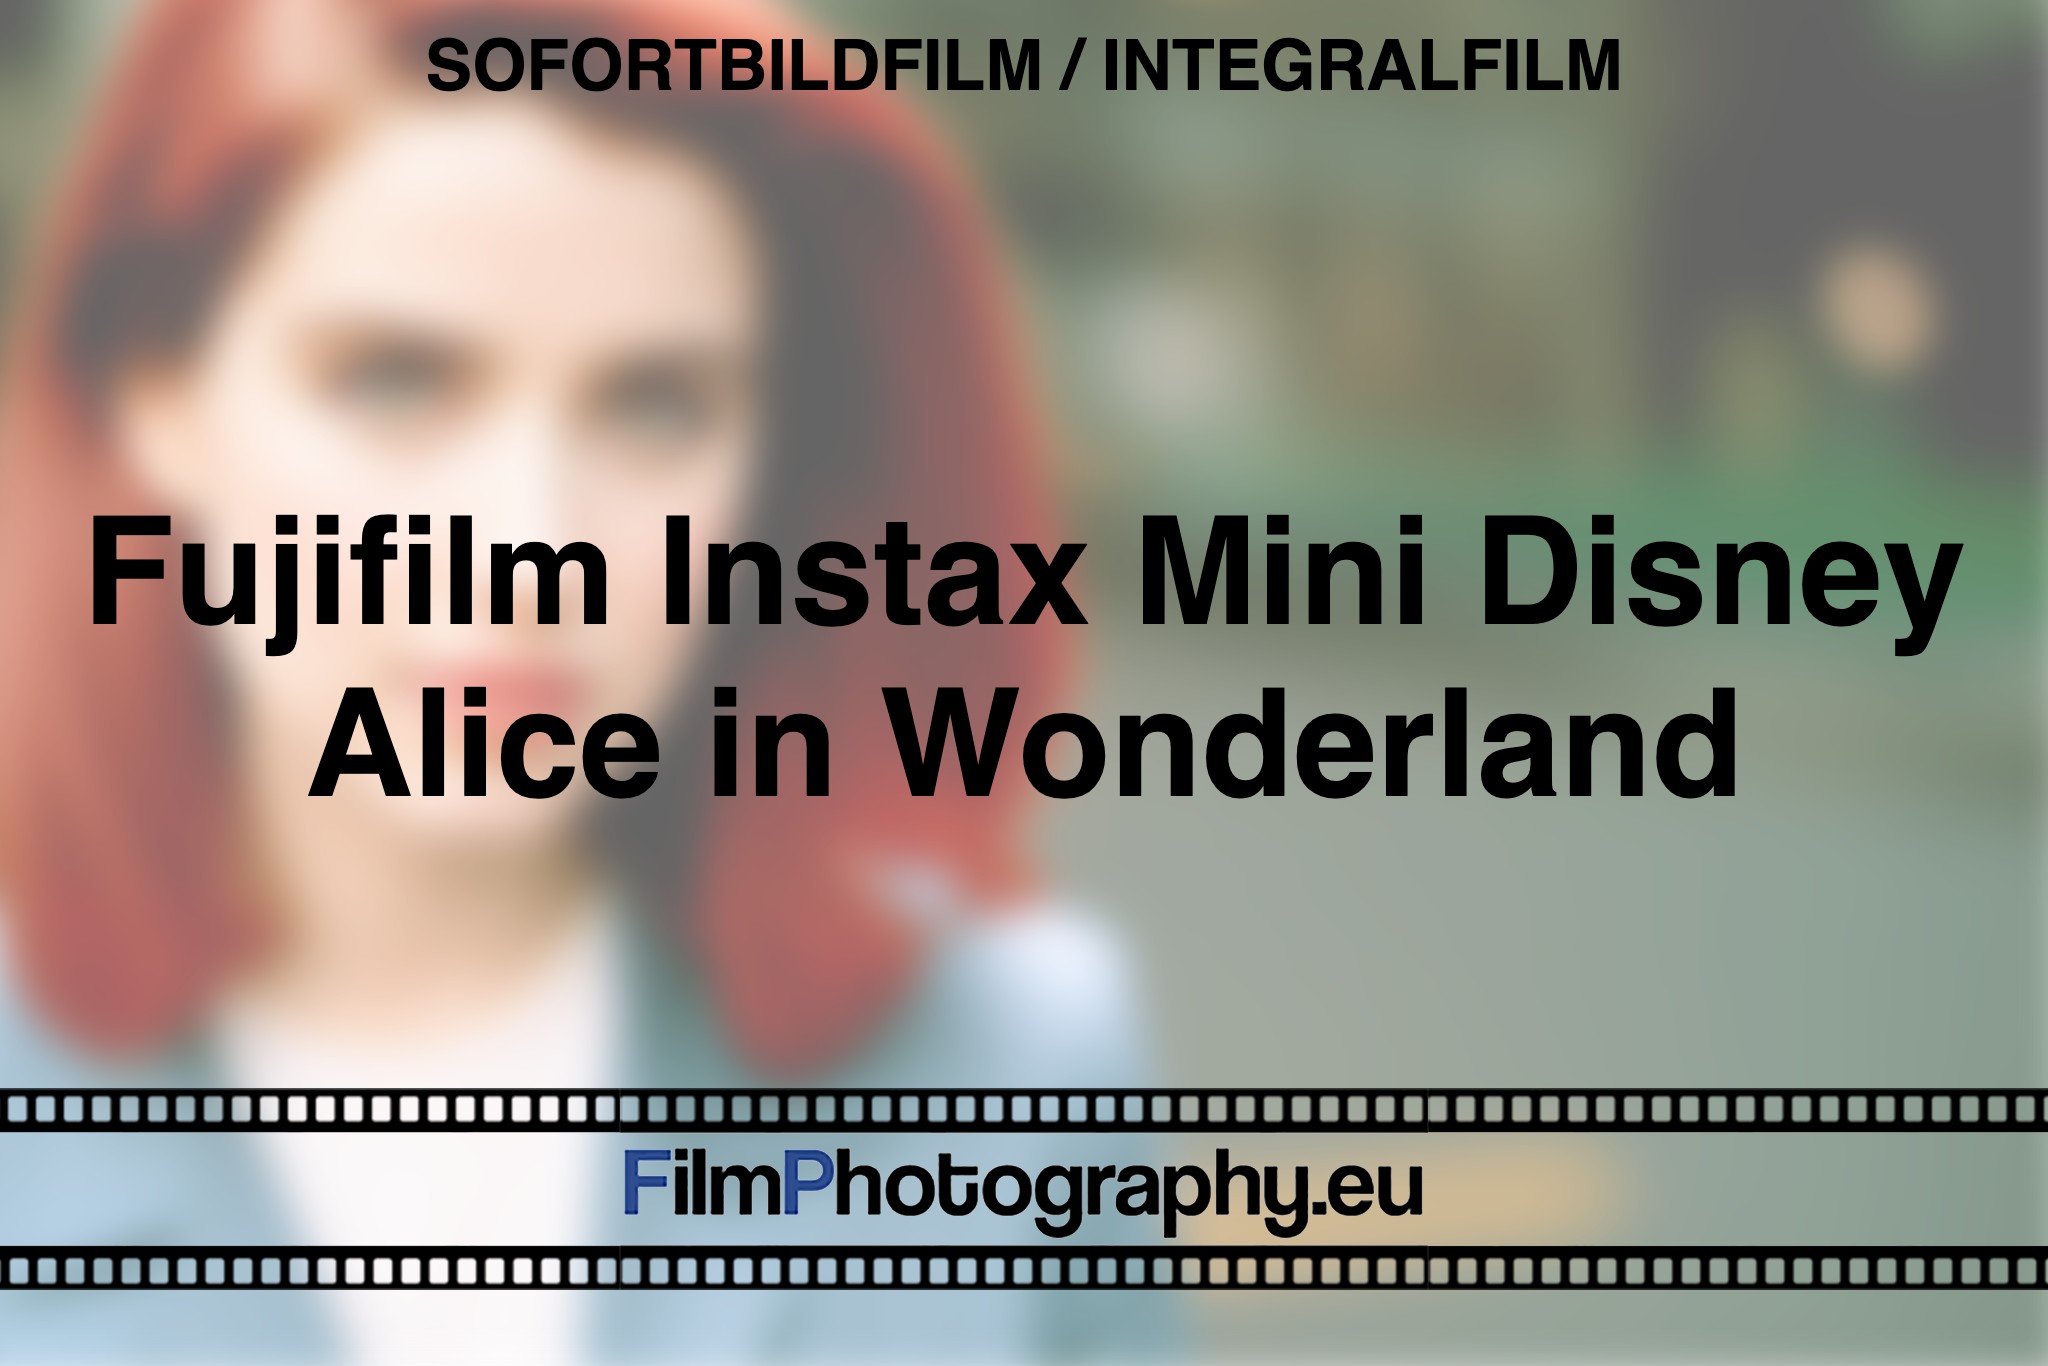 fujifilm-instax-mini-disney-alice-in-wonderland-sofortbildfilm-integralfilm-fp-bnv